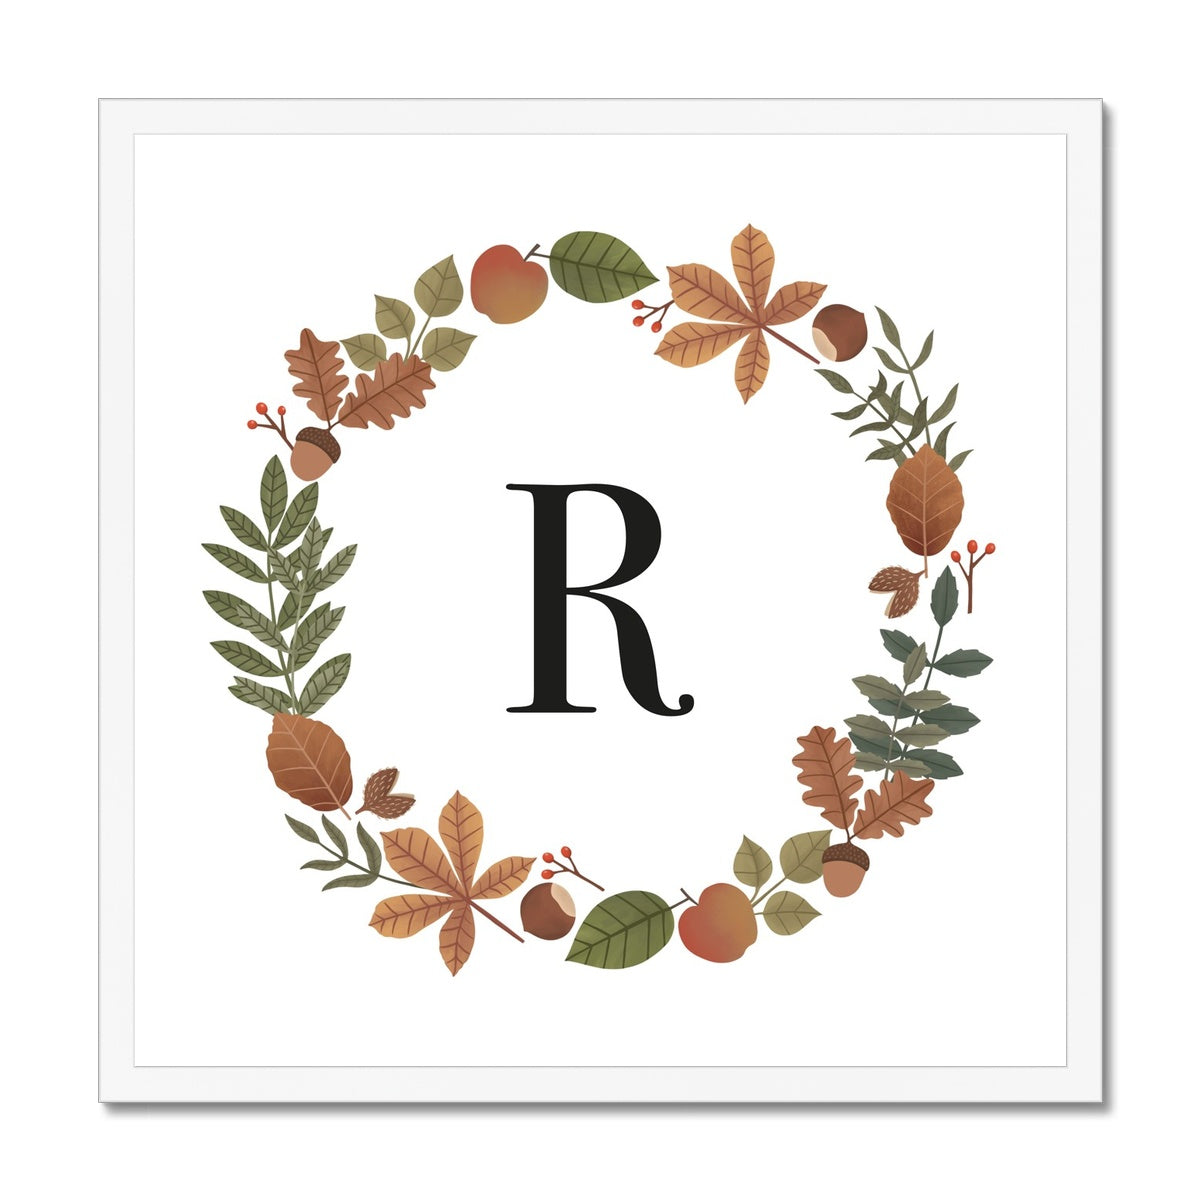 Personalised Leaf Wreath in white / Framed Print